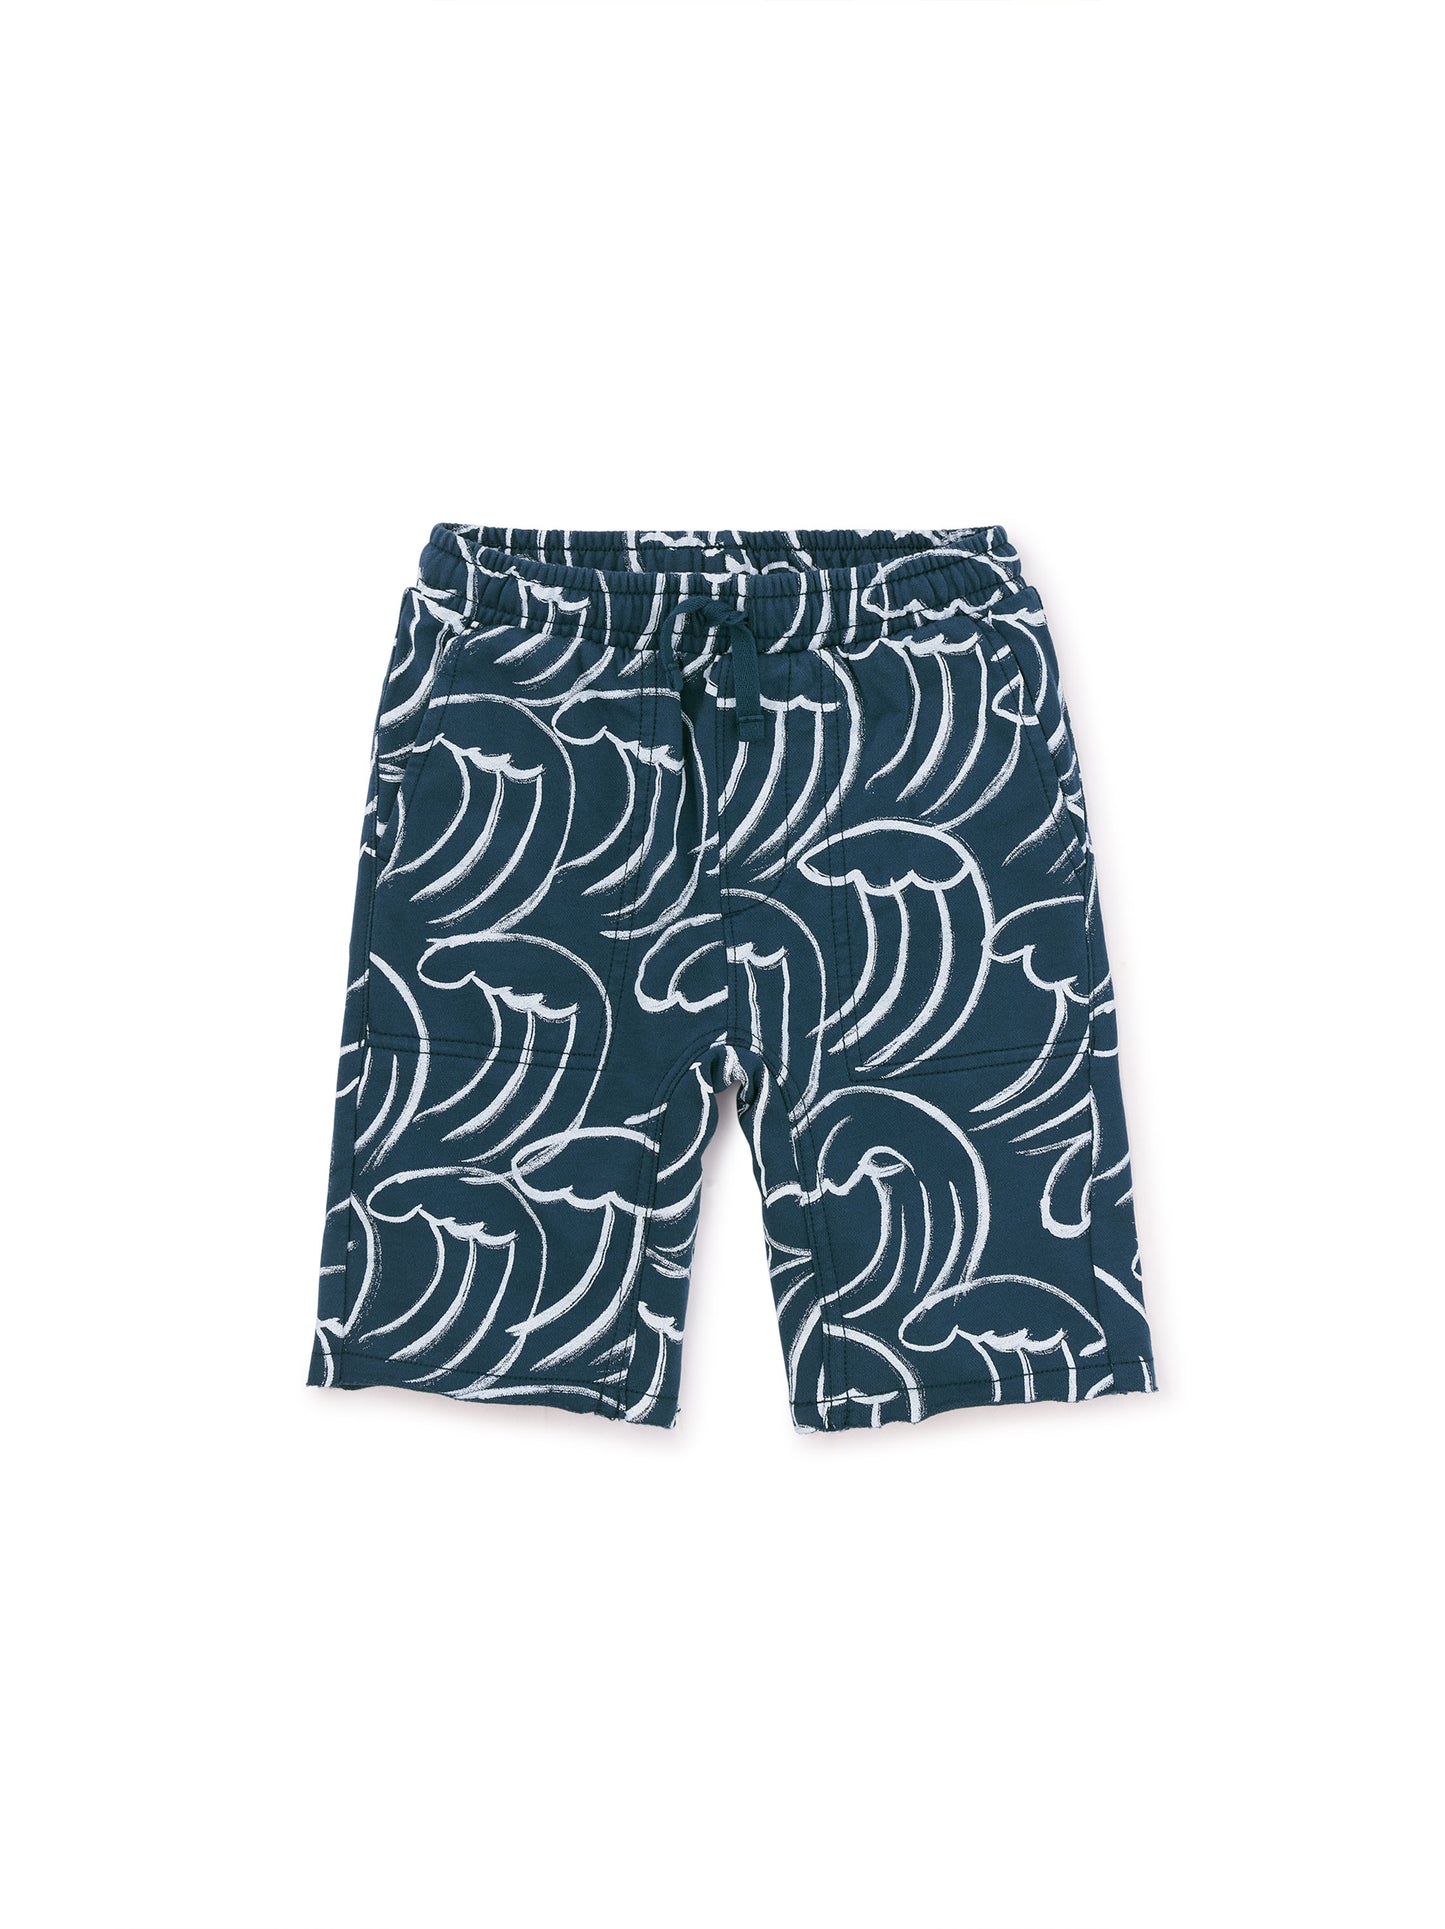 Tea Kanagawa Waves | Printed Gym Shorts